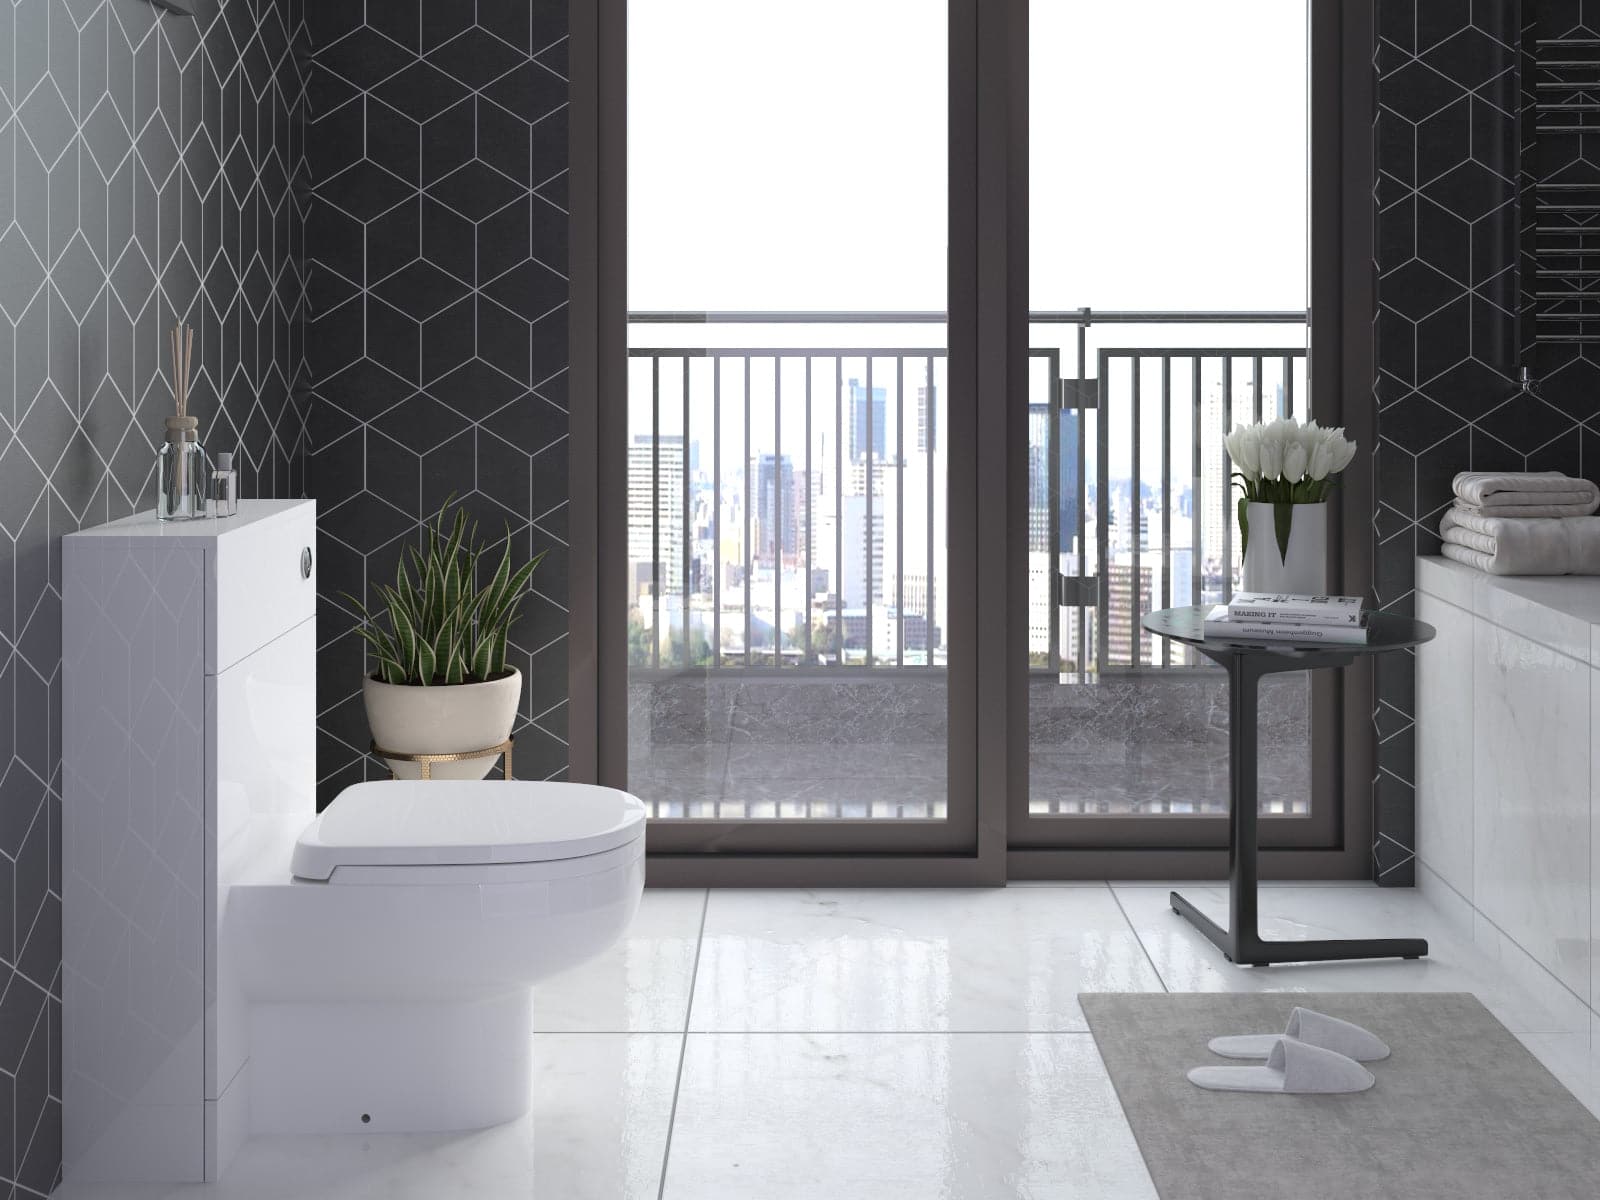 Gamma L Shape Vanity & WC Unit - LH Gloss White, modern bathroom storage solution, space-saving design, UK trends in home improvement.